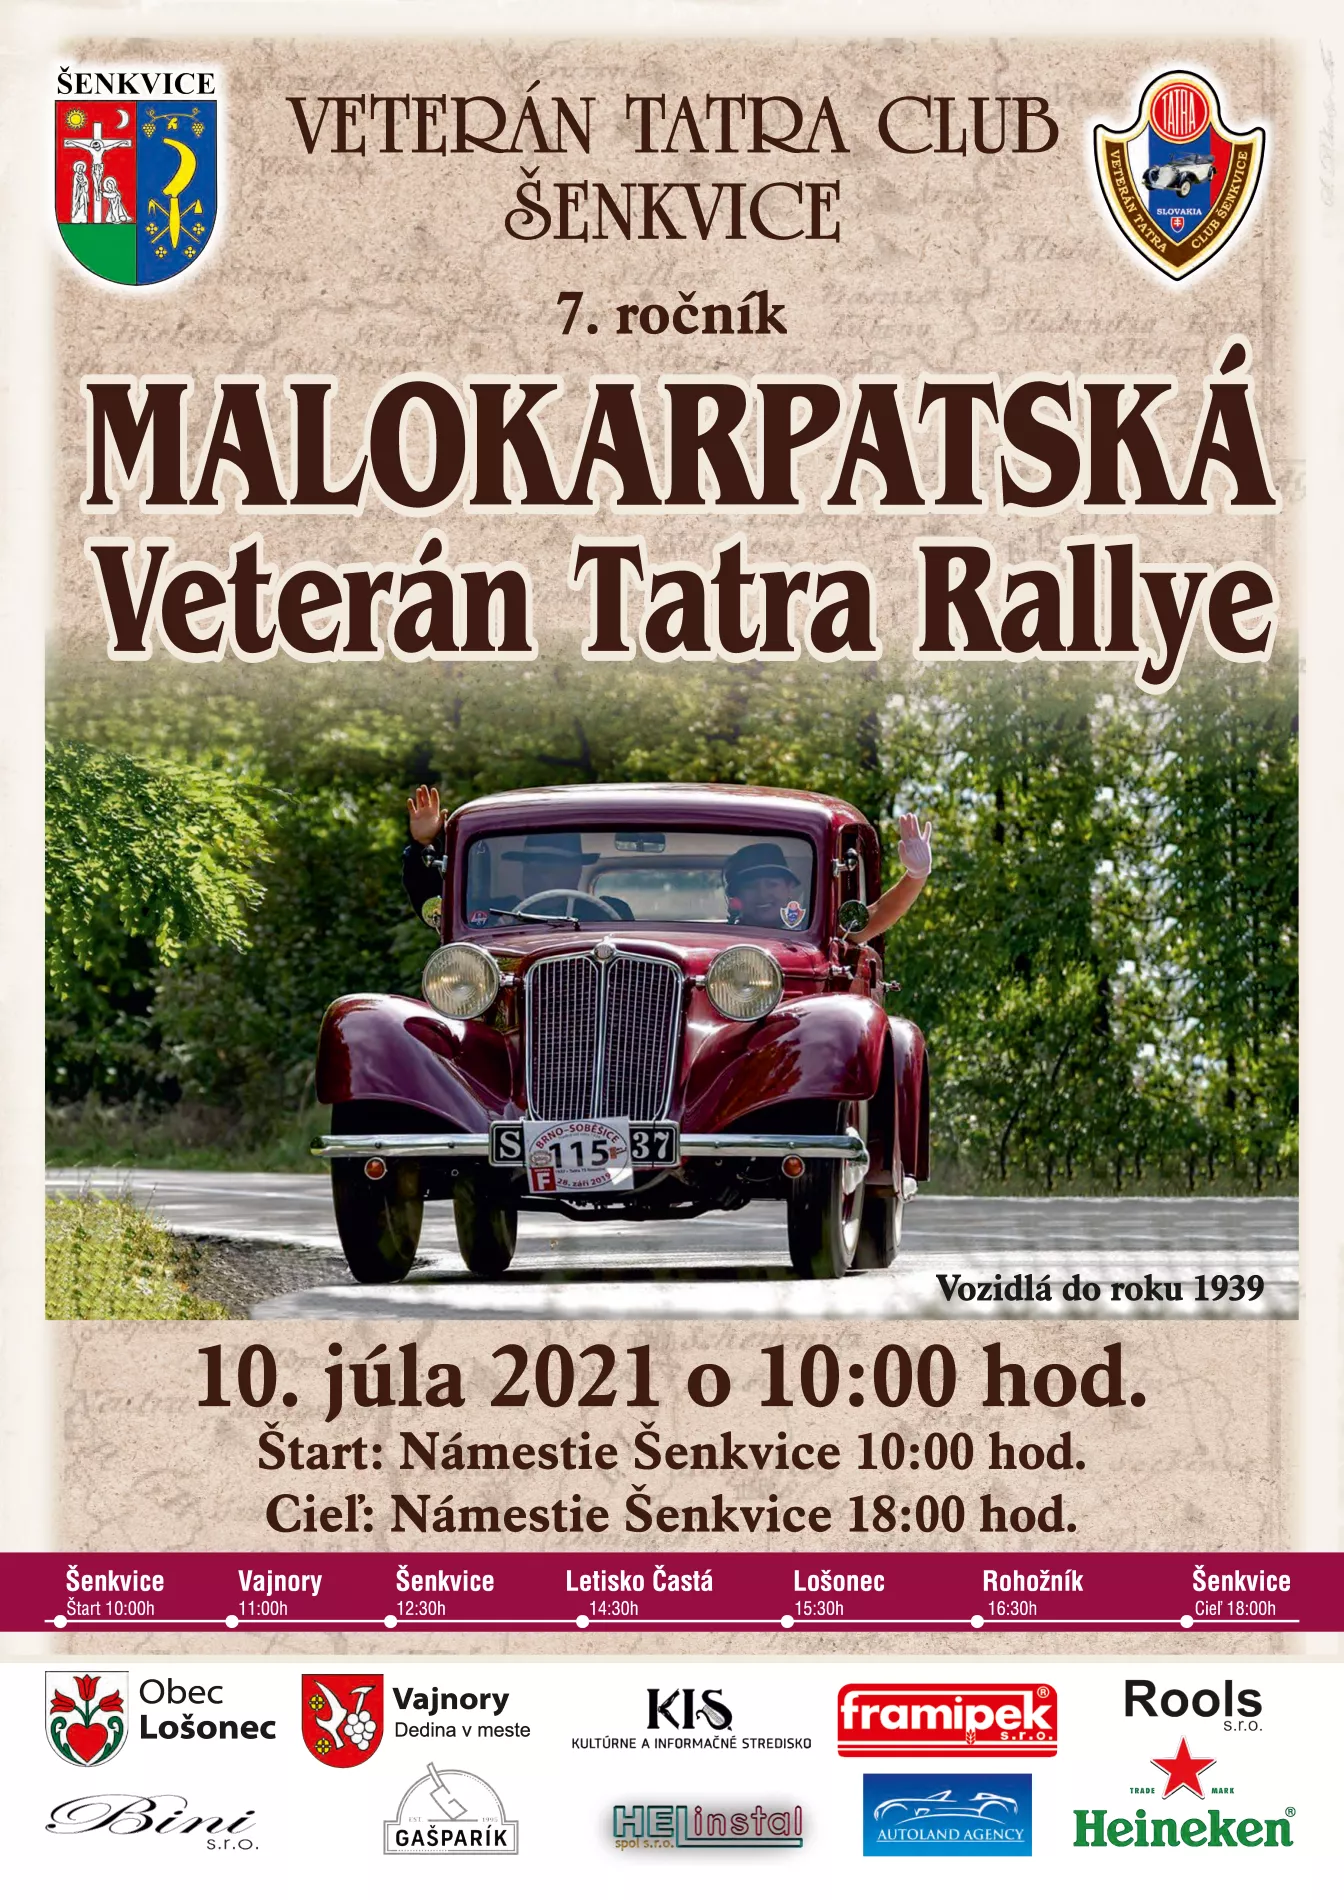 Malokarpatská Veterán Tatra Rallye